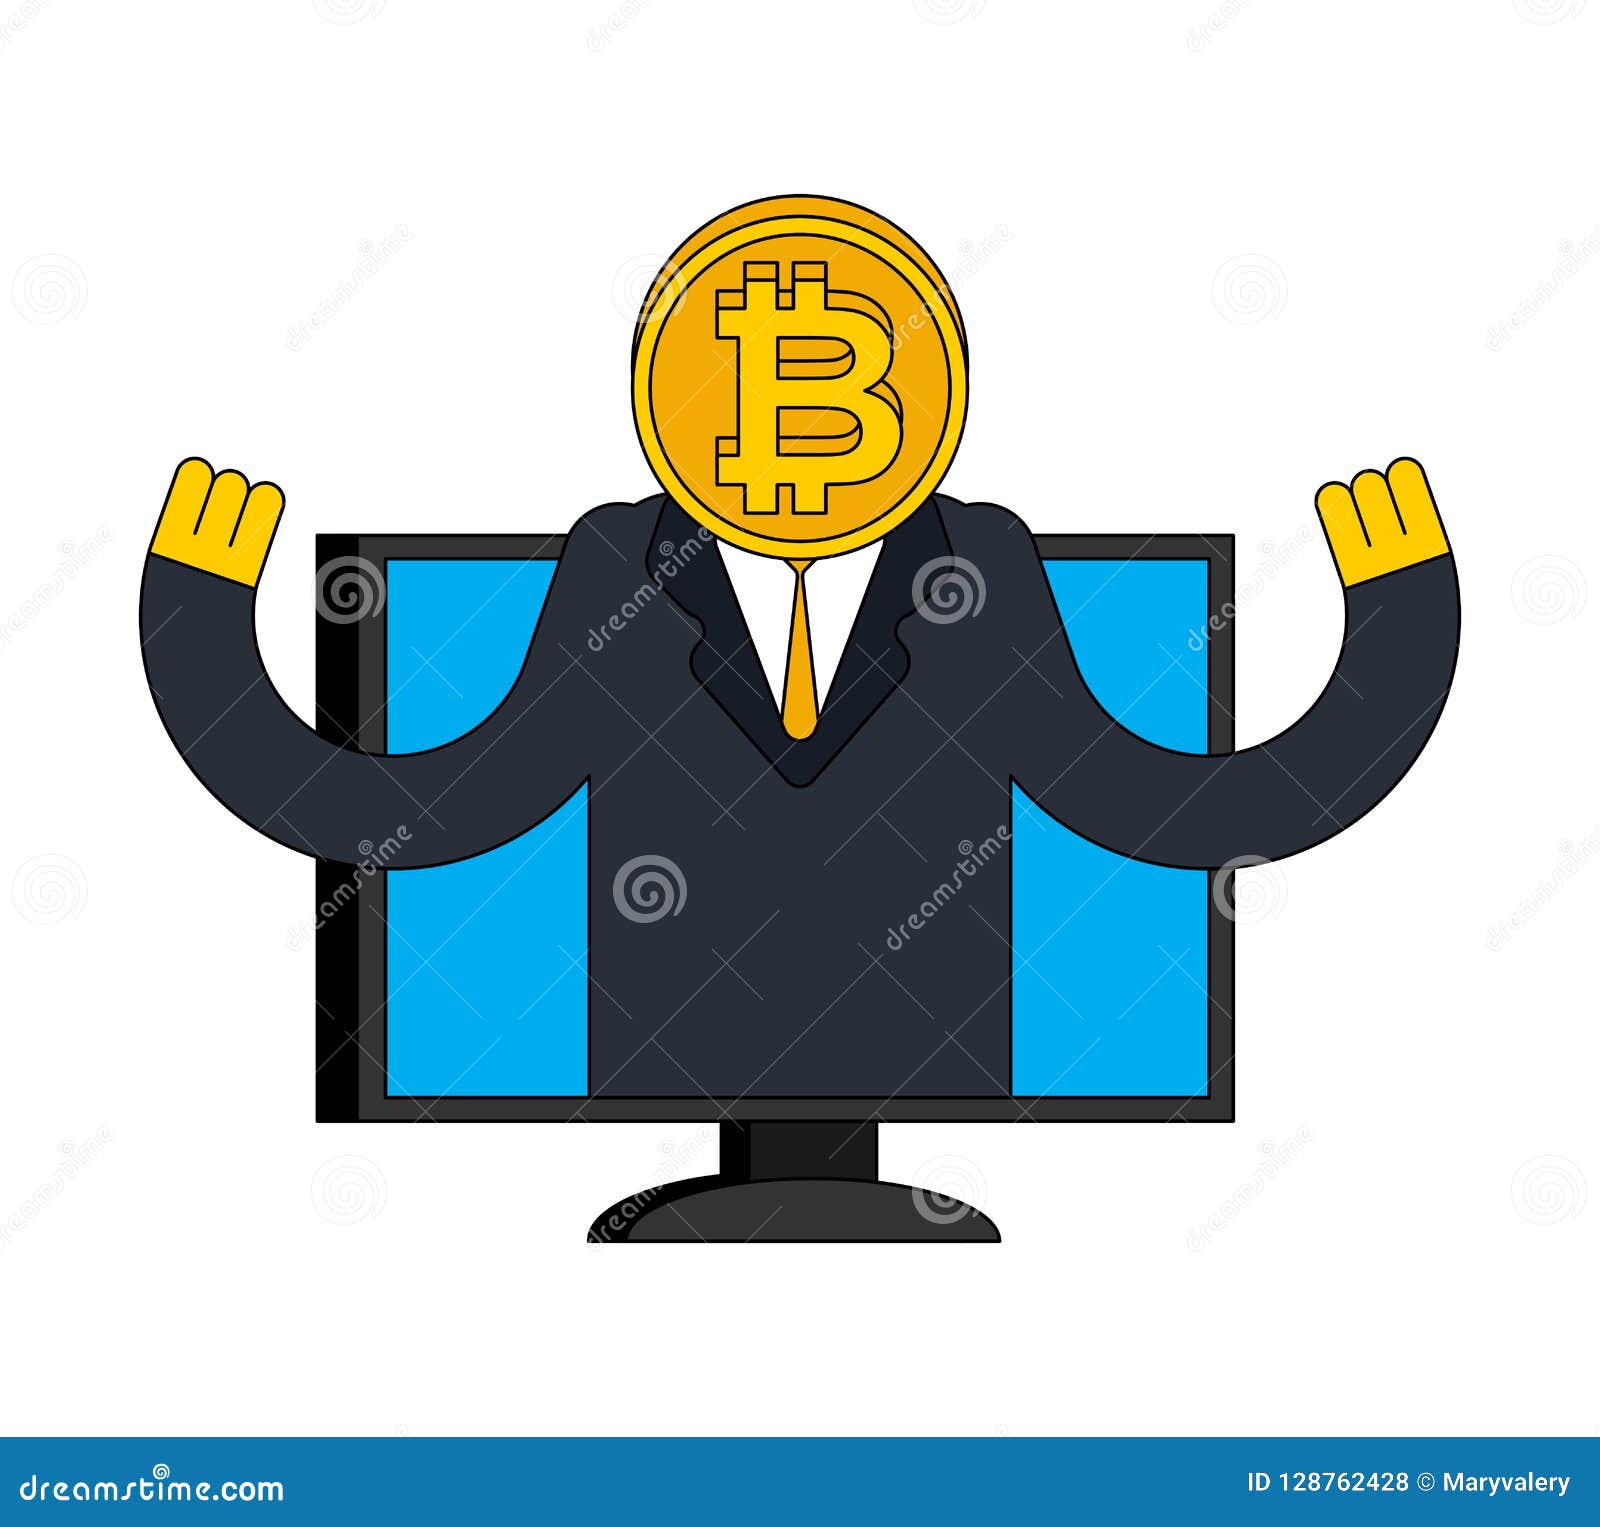 broker operator bitcoin)